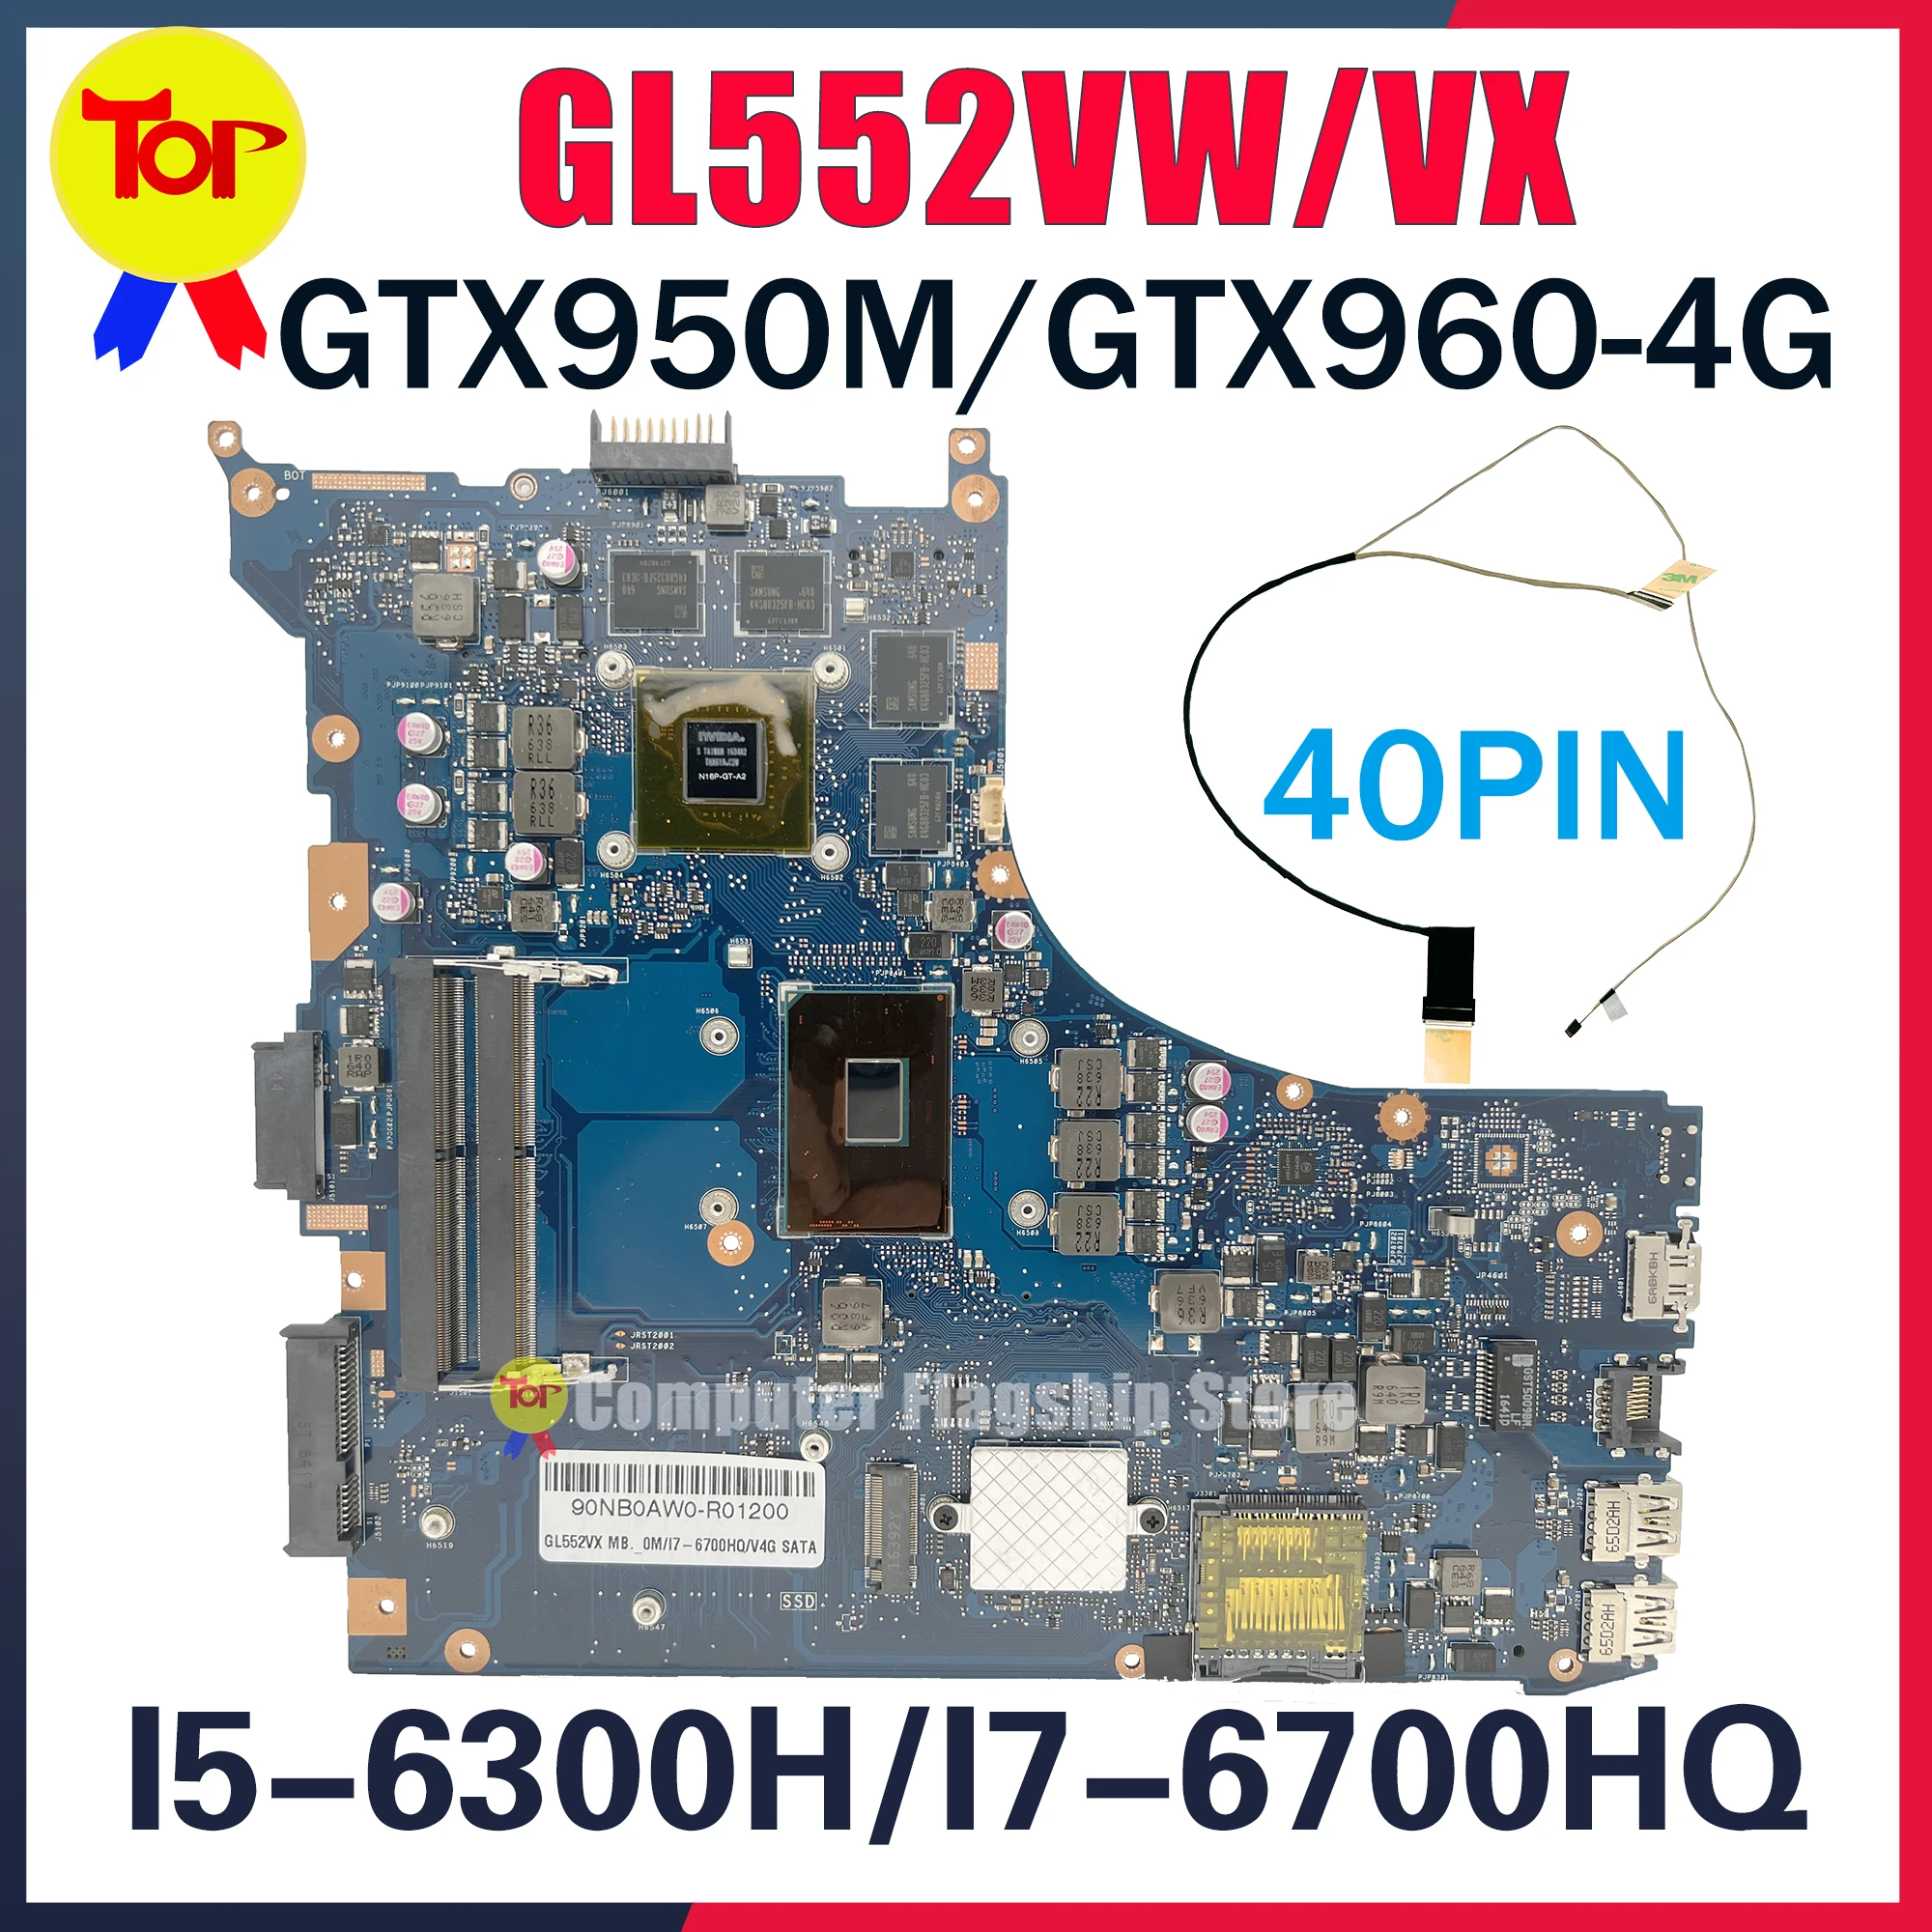 

KEFU GL552V Laptop Motherboard For ASUS ROG GL552VW GL552VX GL552VXK I5-6300HQ I7-6700HQ I7-7700HQ GTX950 Mainboard 100% Working